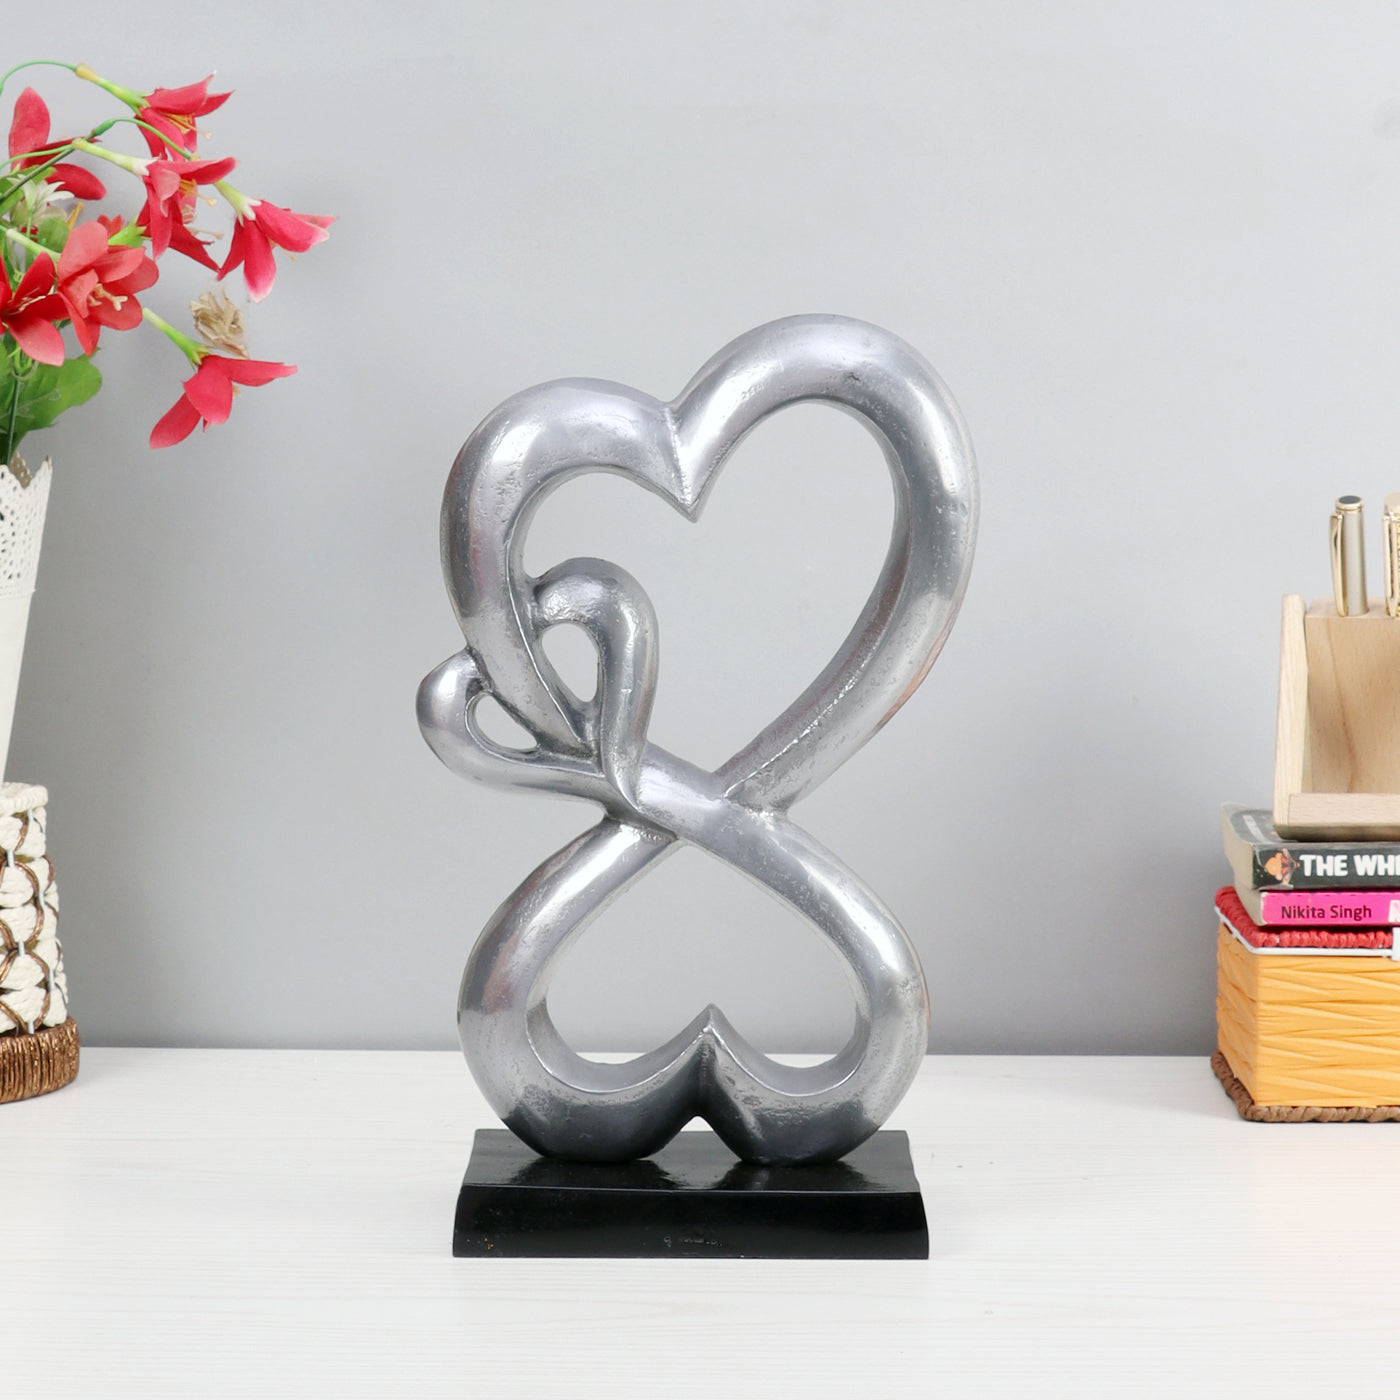 DecorTwist Brings Silver Family Heart Sculpture showpiece